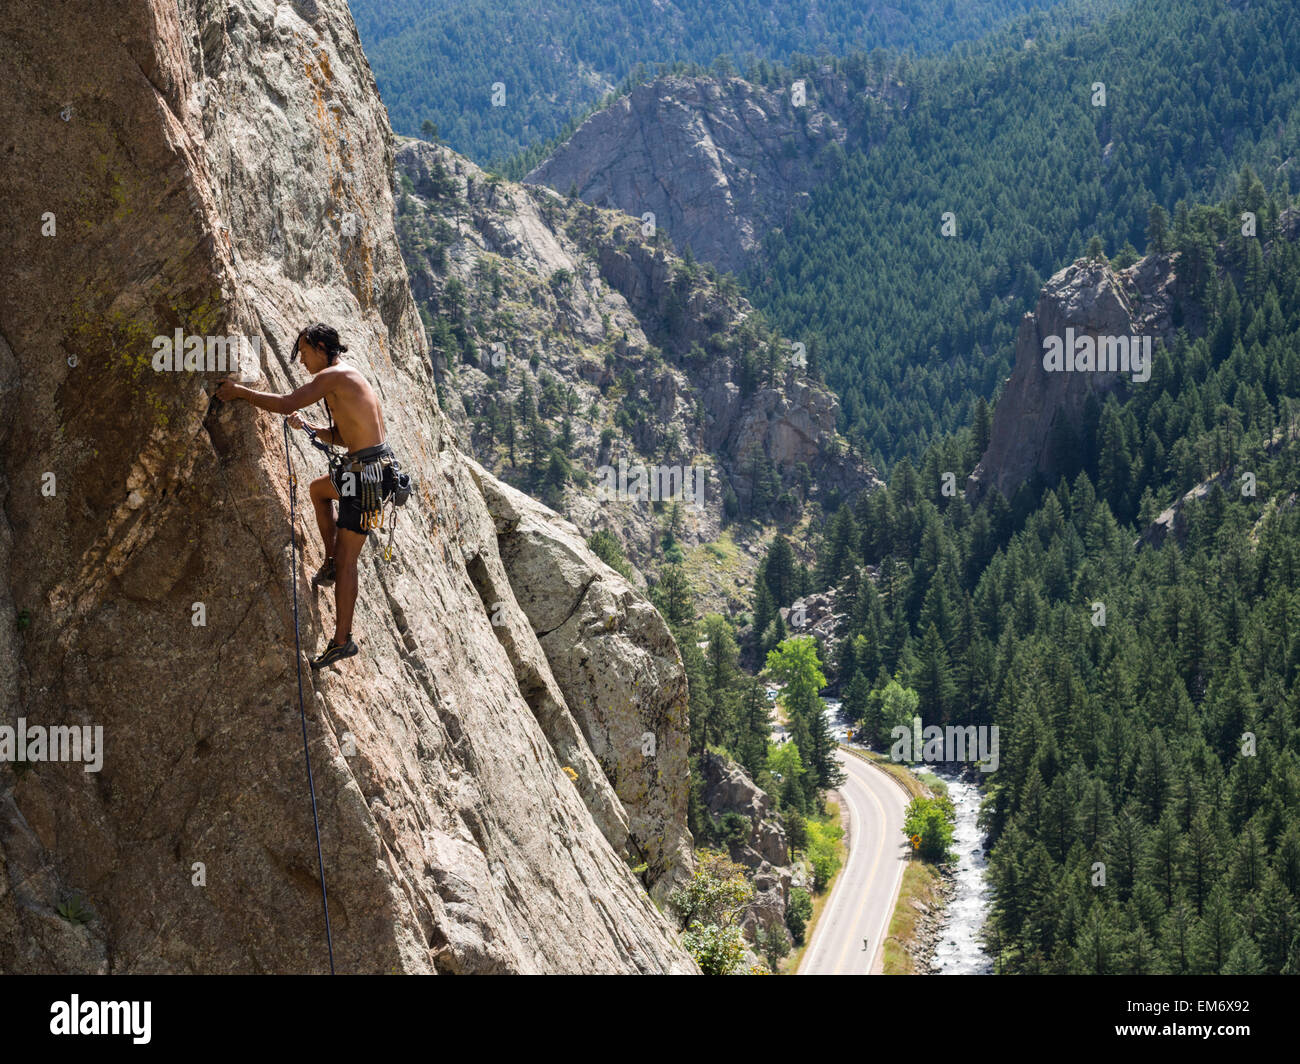 A man climbs a rock route at Sports Park in Boulder Canyon, Colorado. Stock Photo